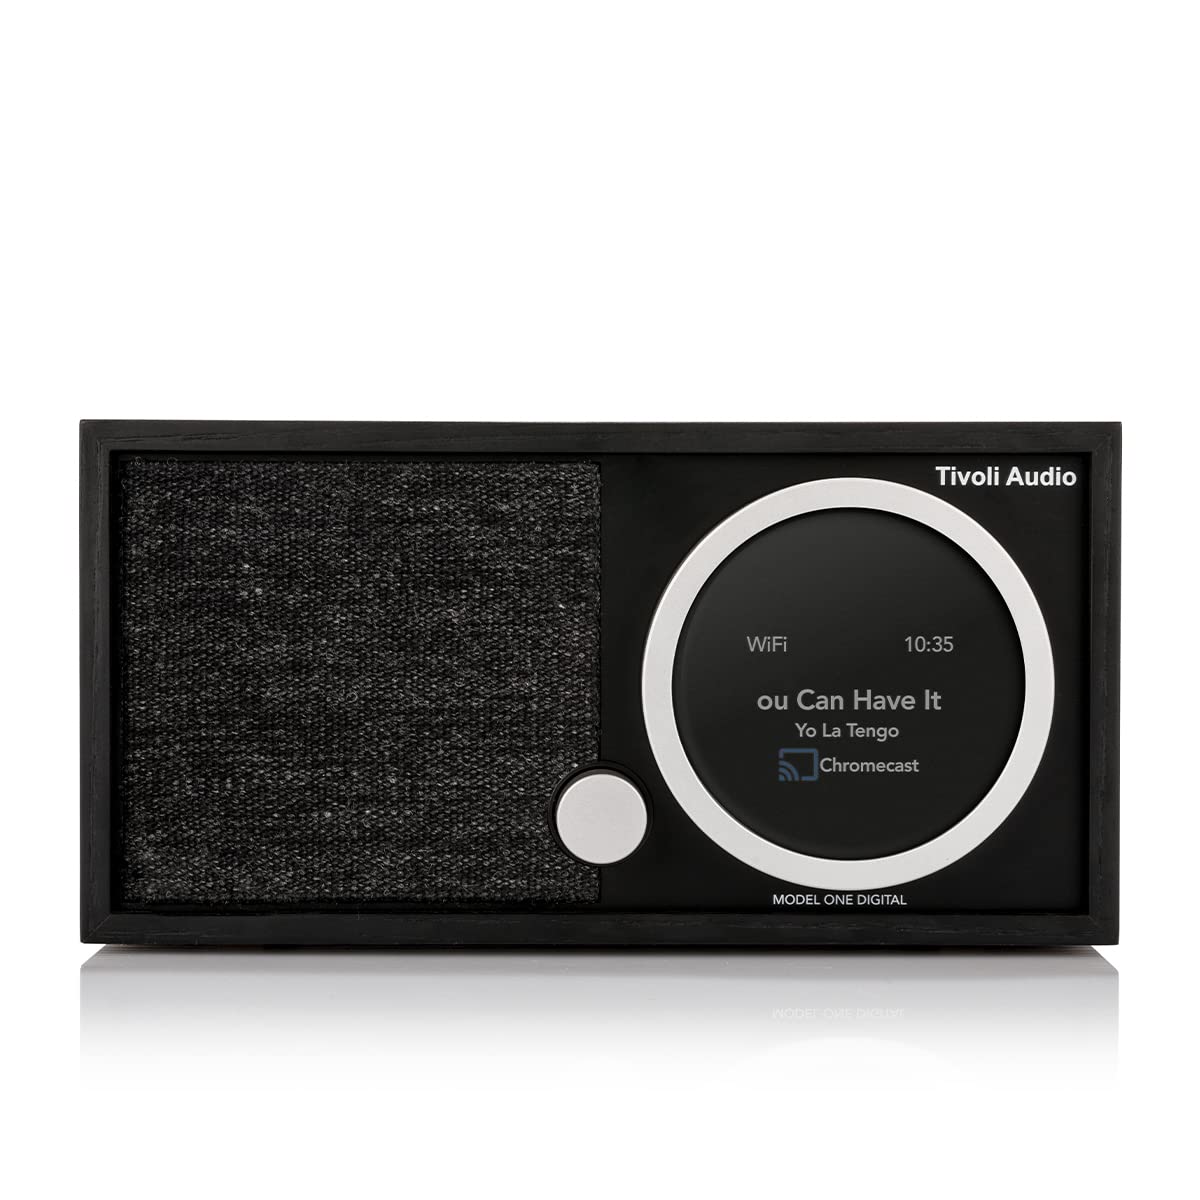 Tivoli Audio Model One Digital Gen 2 DAB+/FM Radio with WLAN and Bluetooth (Schwarze Esche/Schwarz)